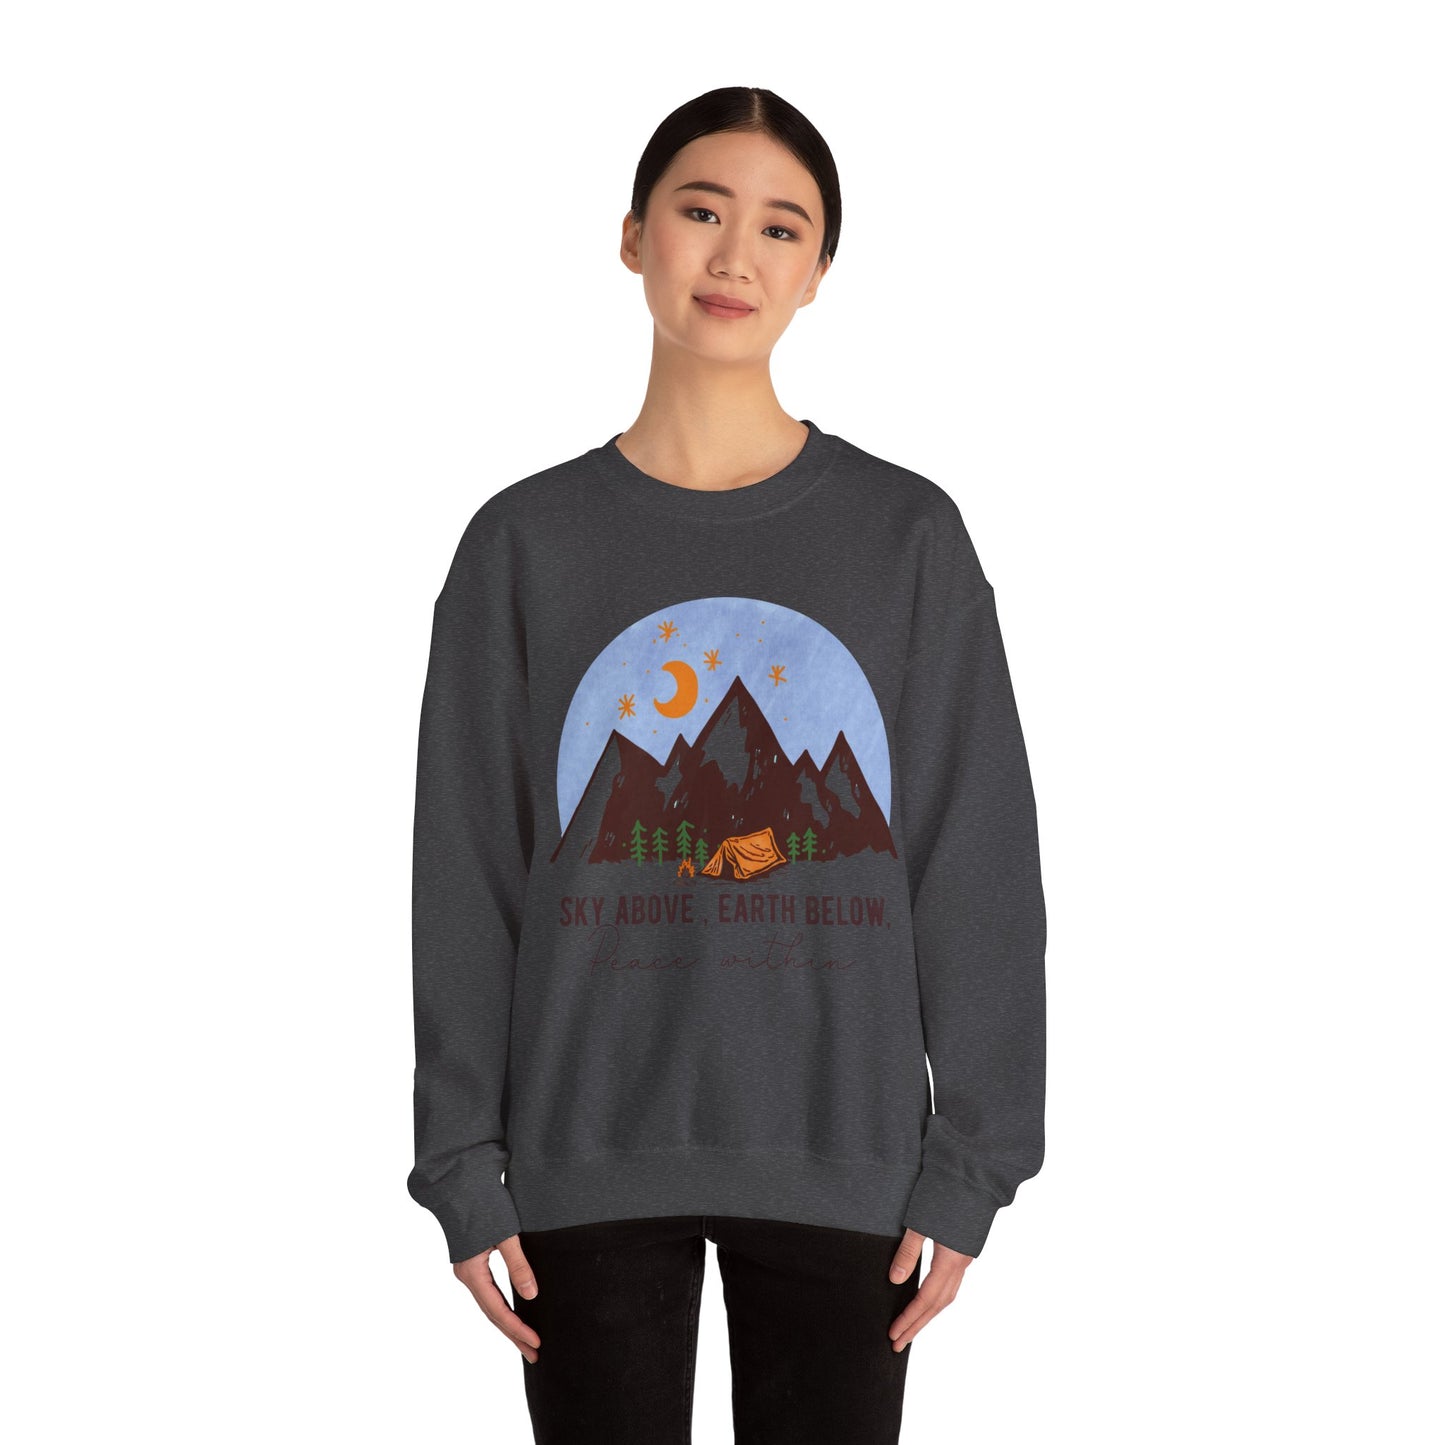 Camping Peace Within Women's Camping Hiking Sweatshirt